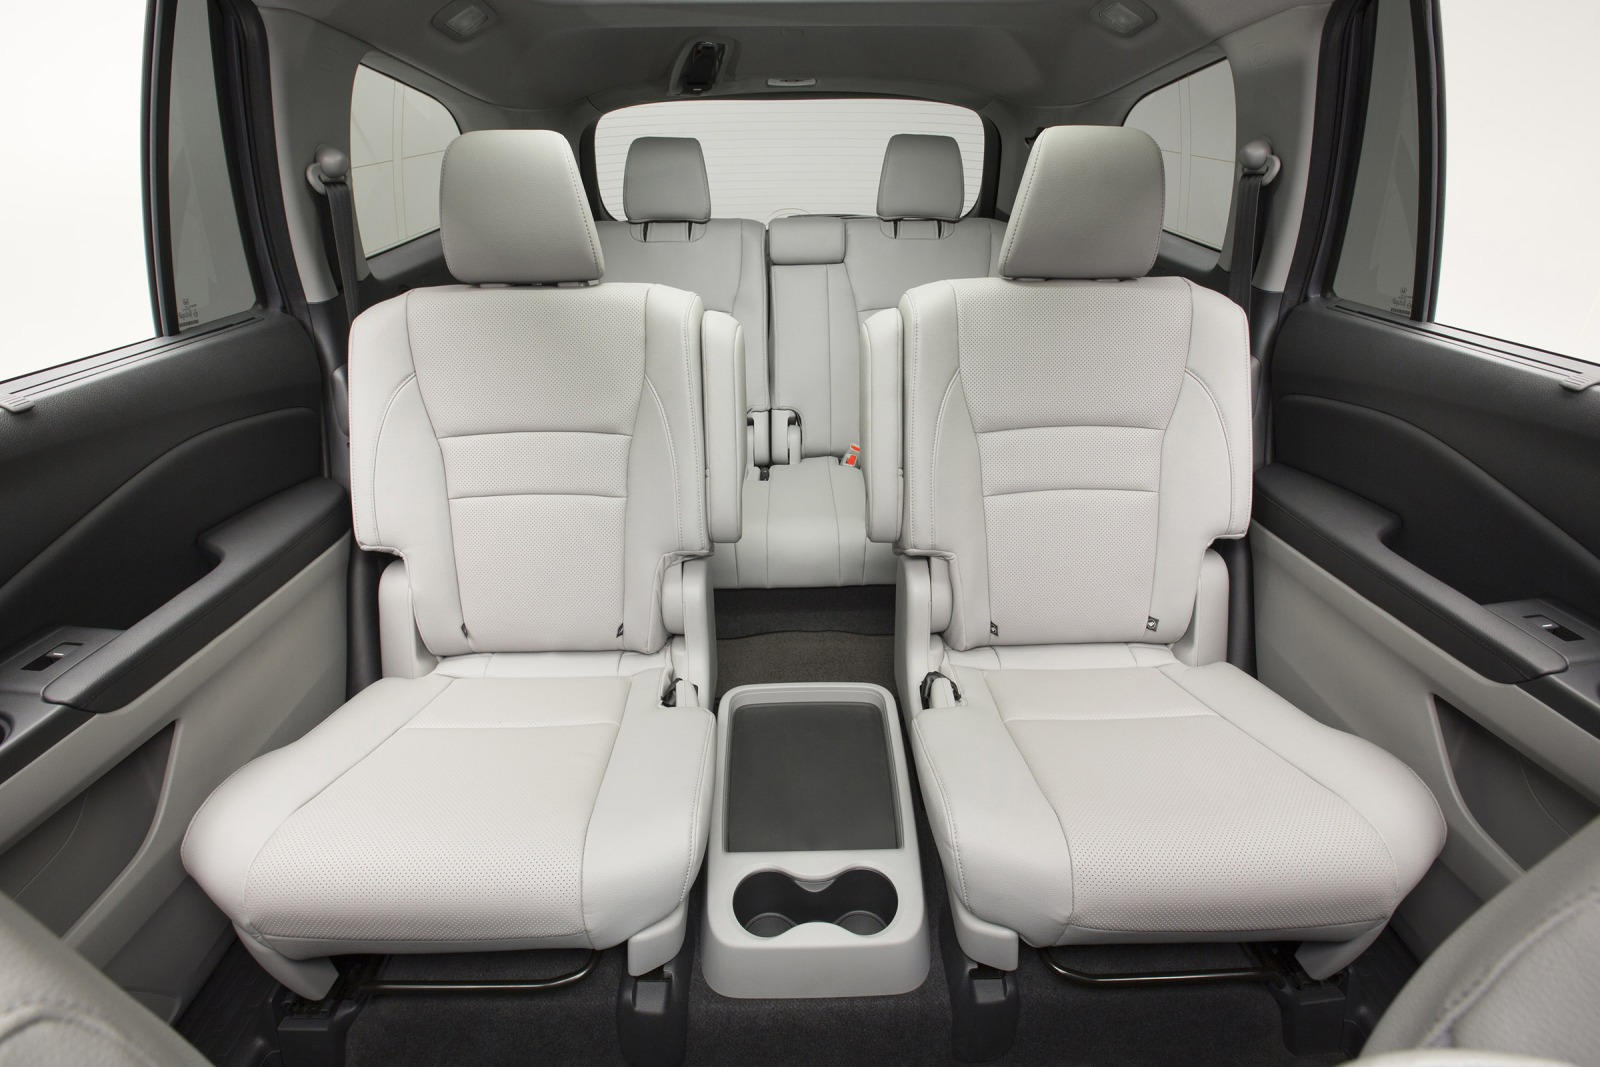 2018 Honda Pilot Interior Dimensions: Seating, Cargo Space & Trunk Size -  Photos | CarBuzz